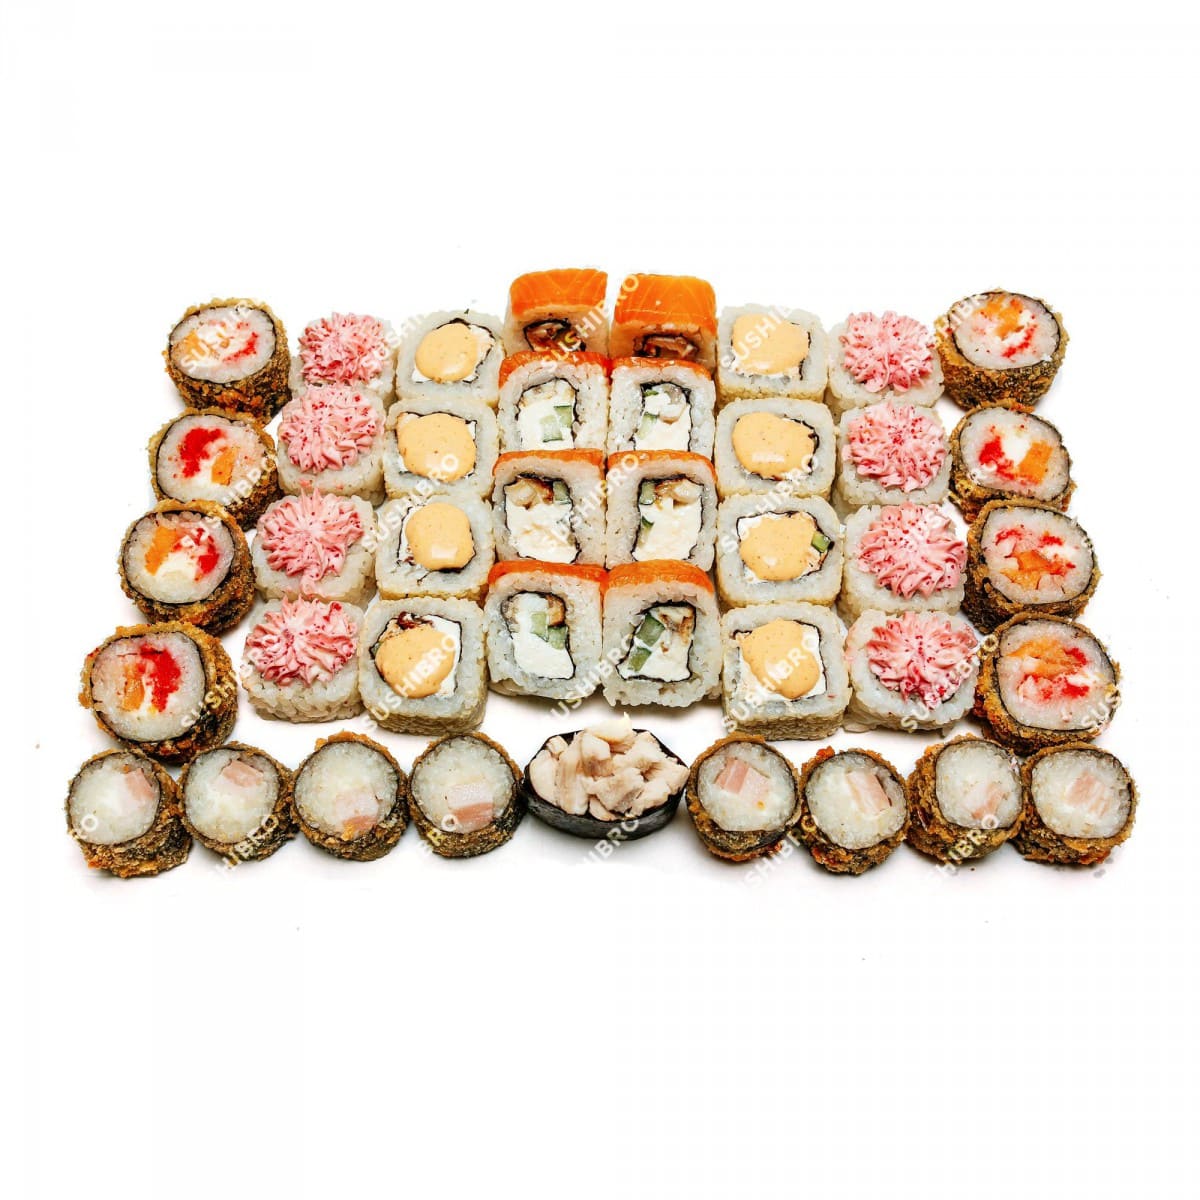 Заказать суши на дом в махачкале фото 2